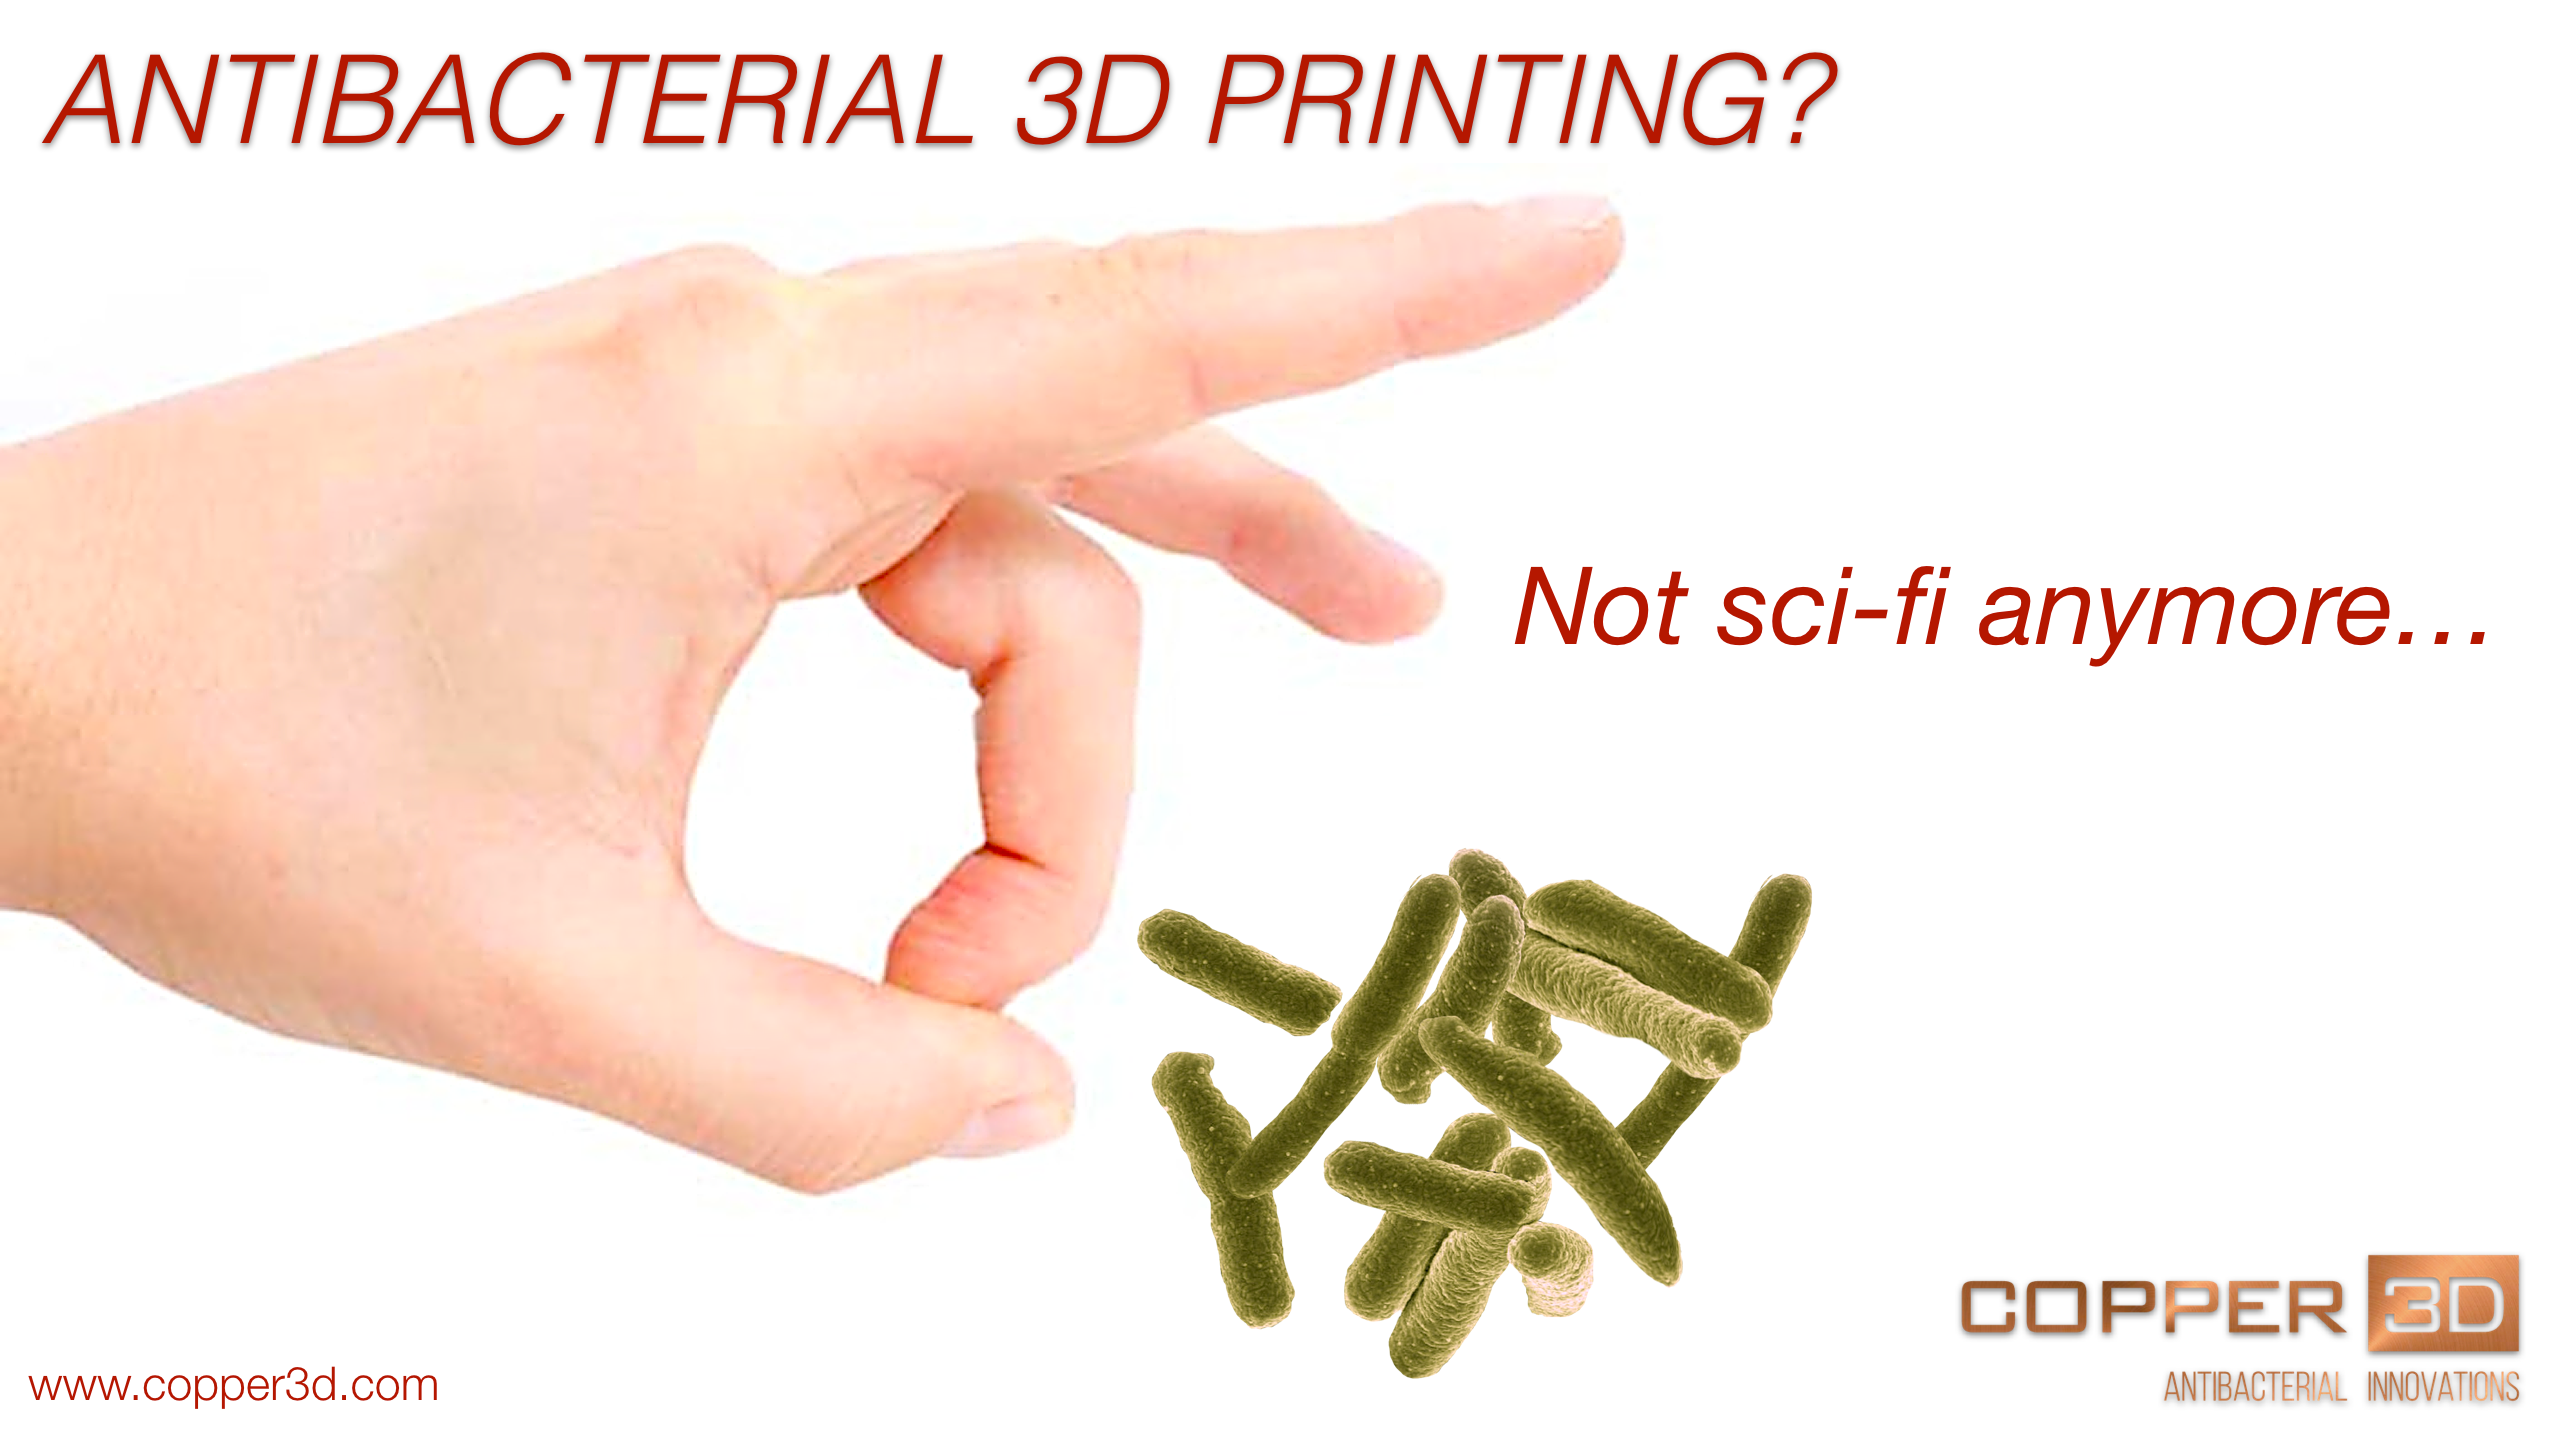 TPU Filament MD FLEX 1.75mm 500 gram Red 3D Printer Filament